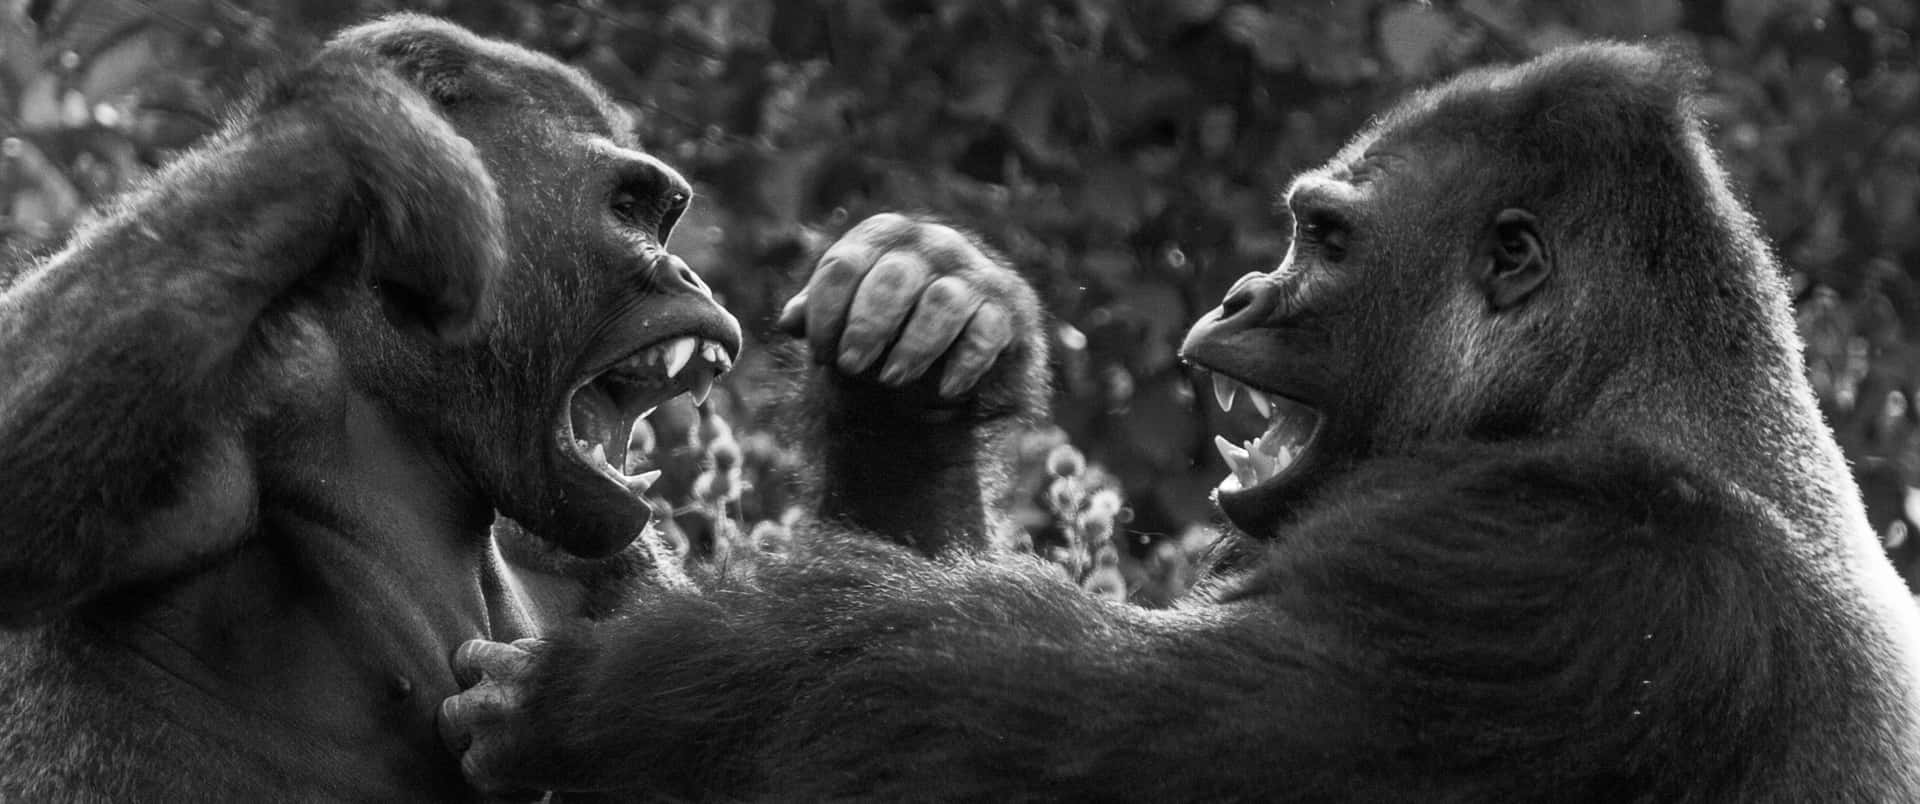 Luchandopor La Dominancia - Fondo De Pantalla De Gorilas 3440x1440p